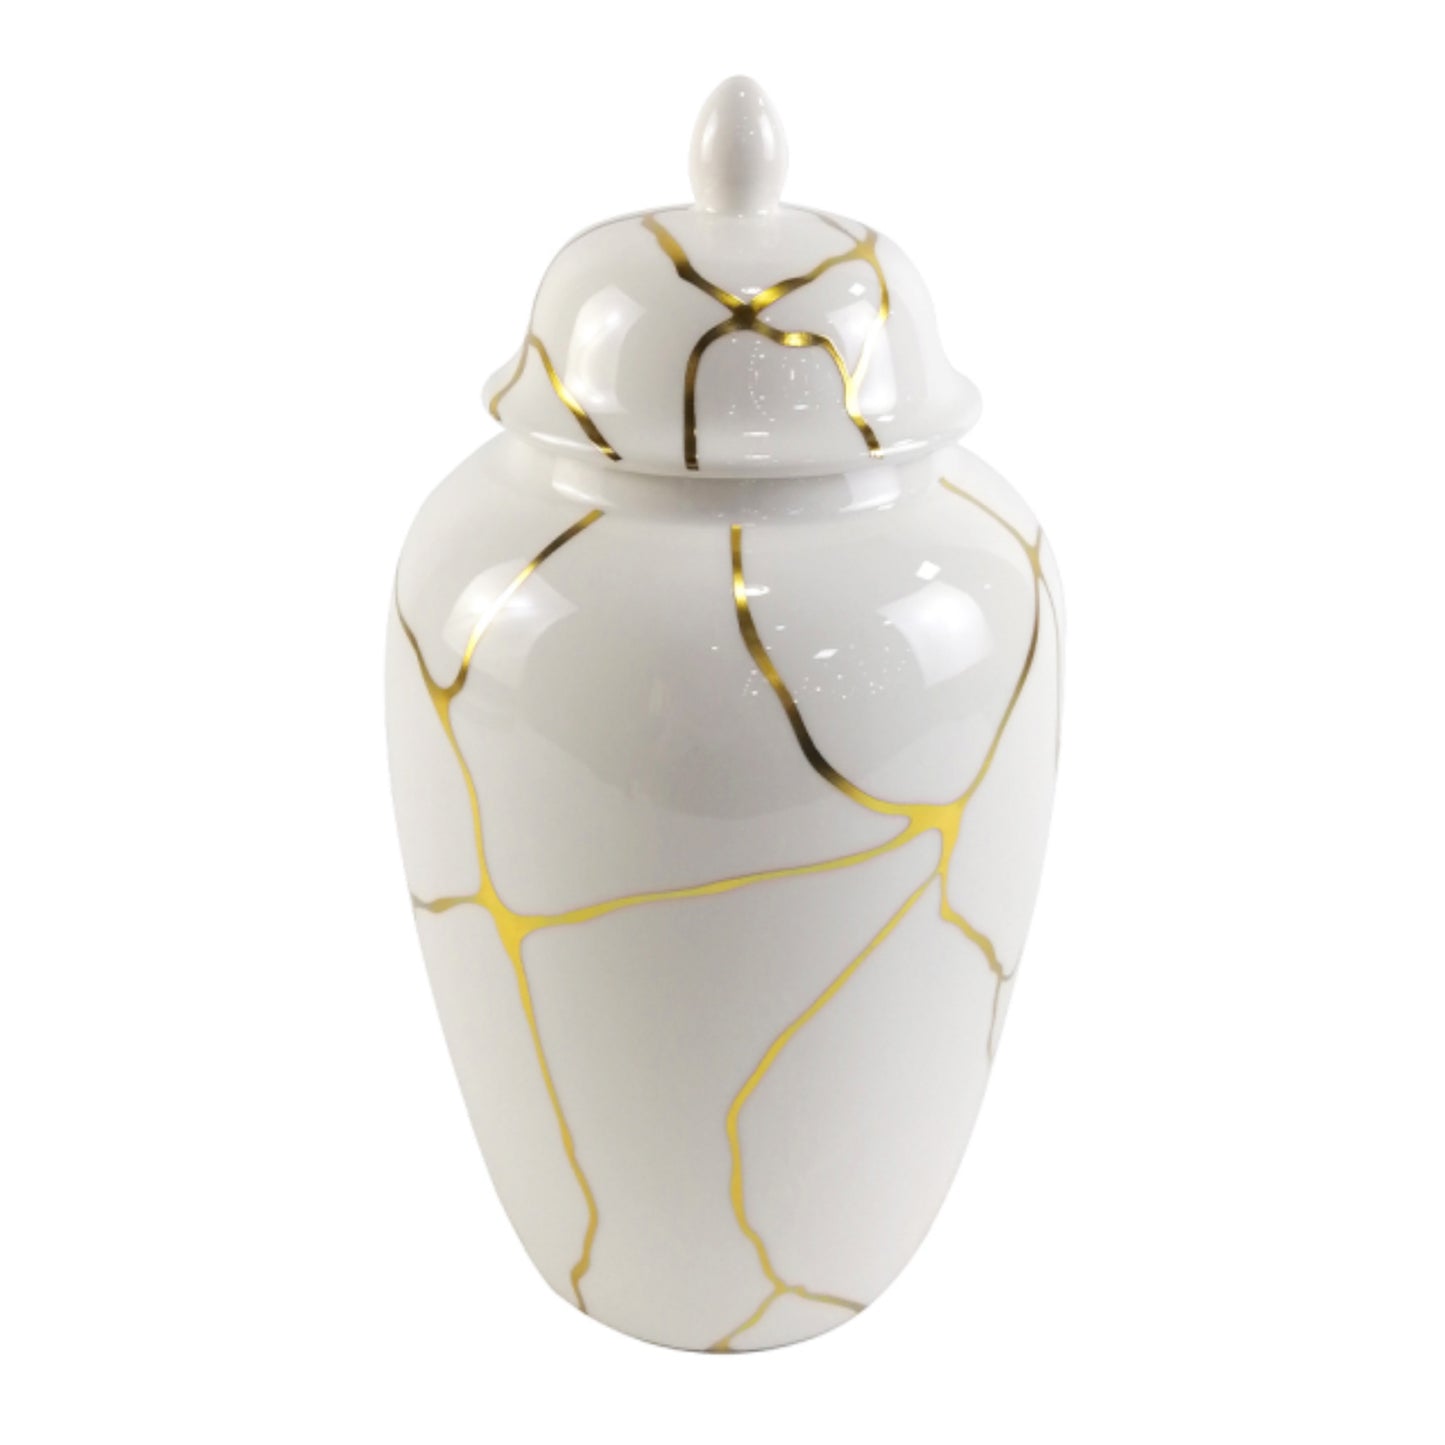 White and Gold Cracked Design Ginger Jar